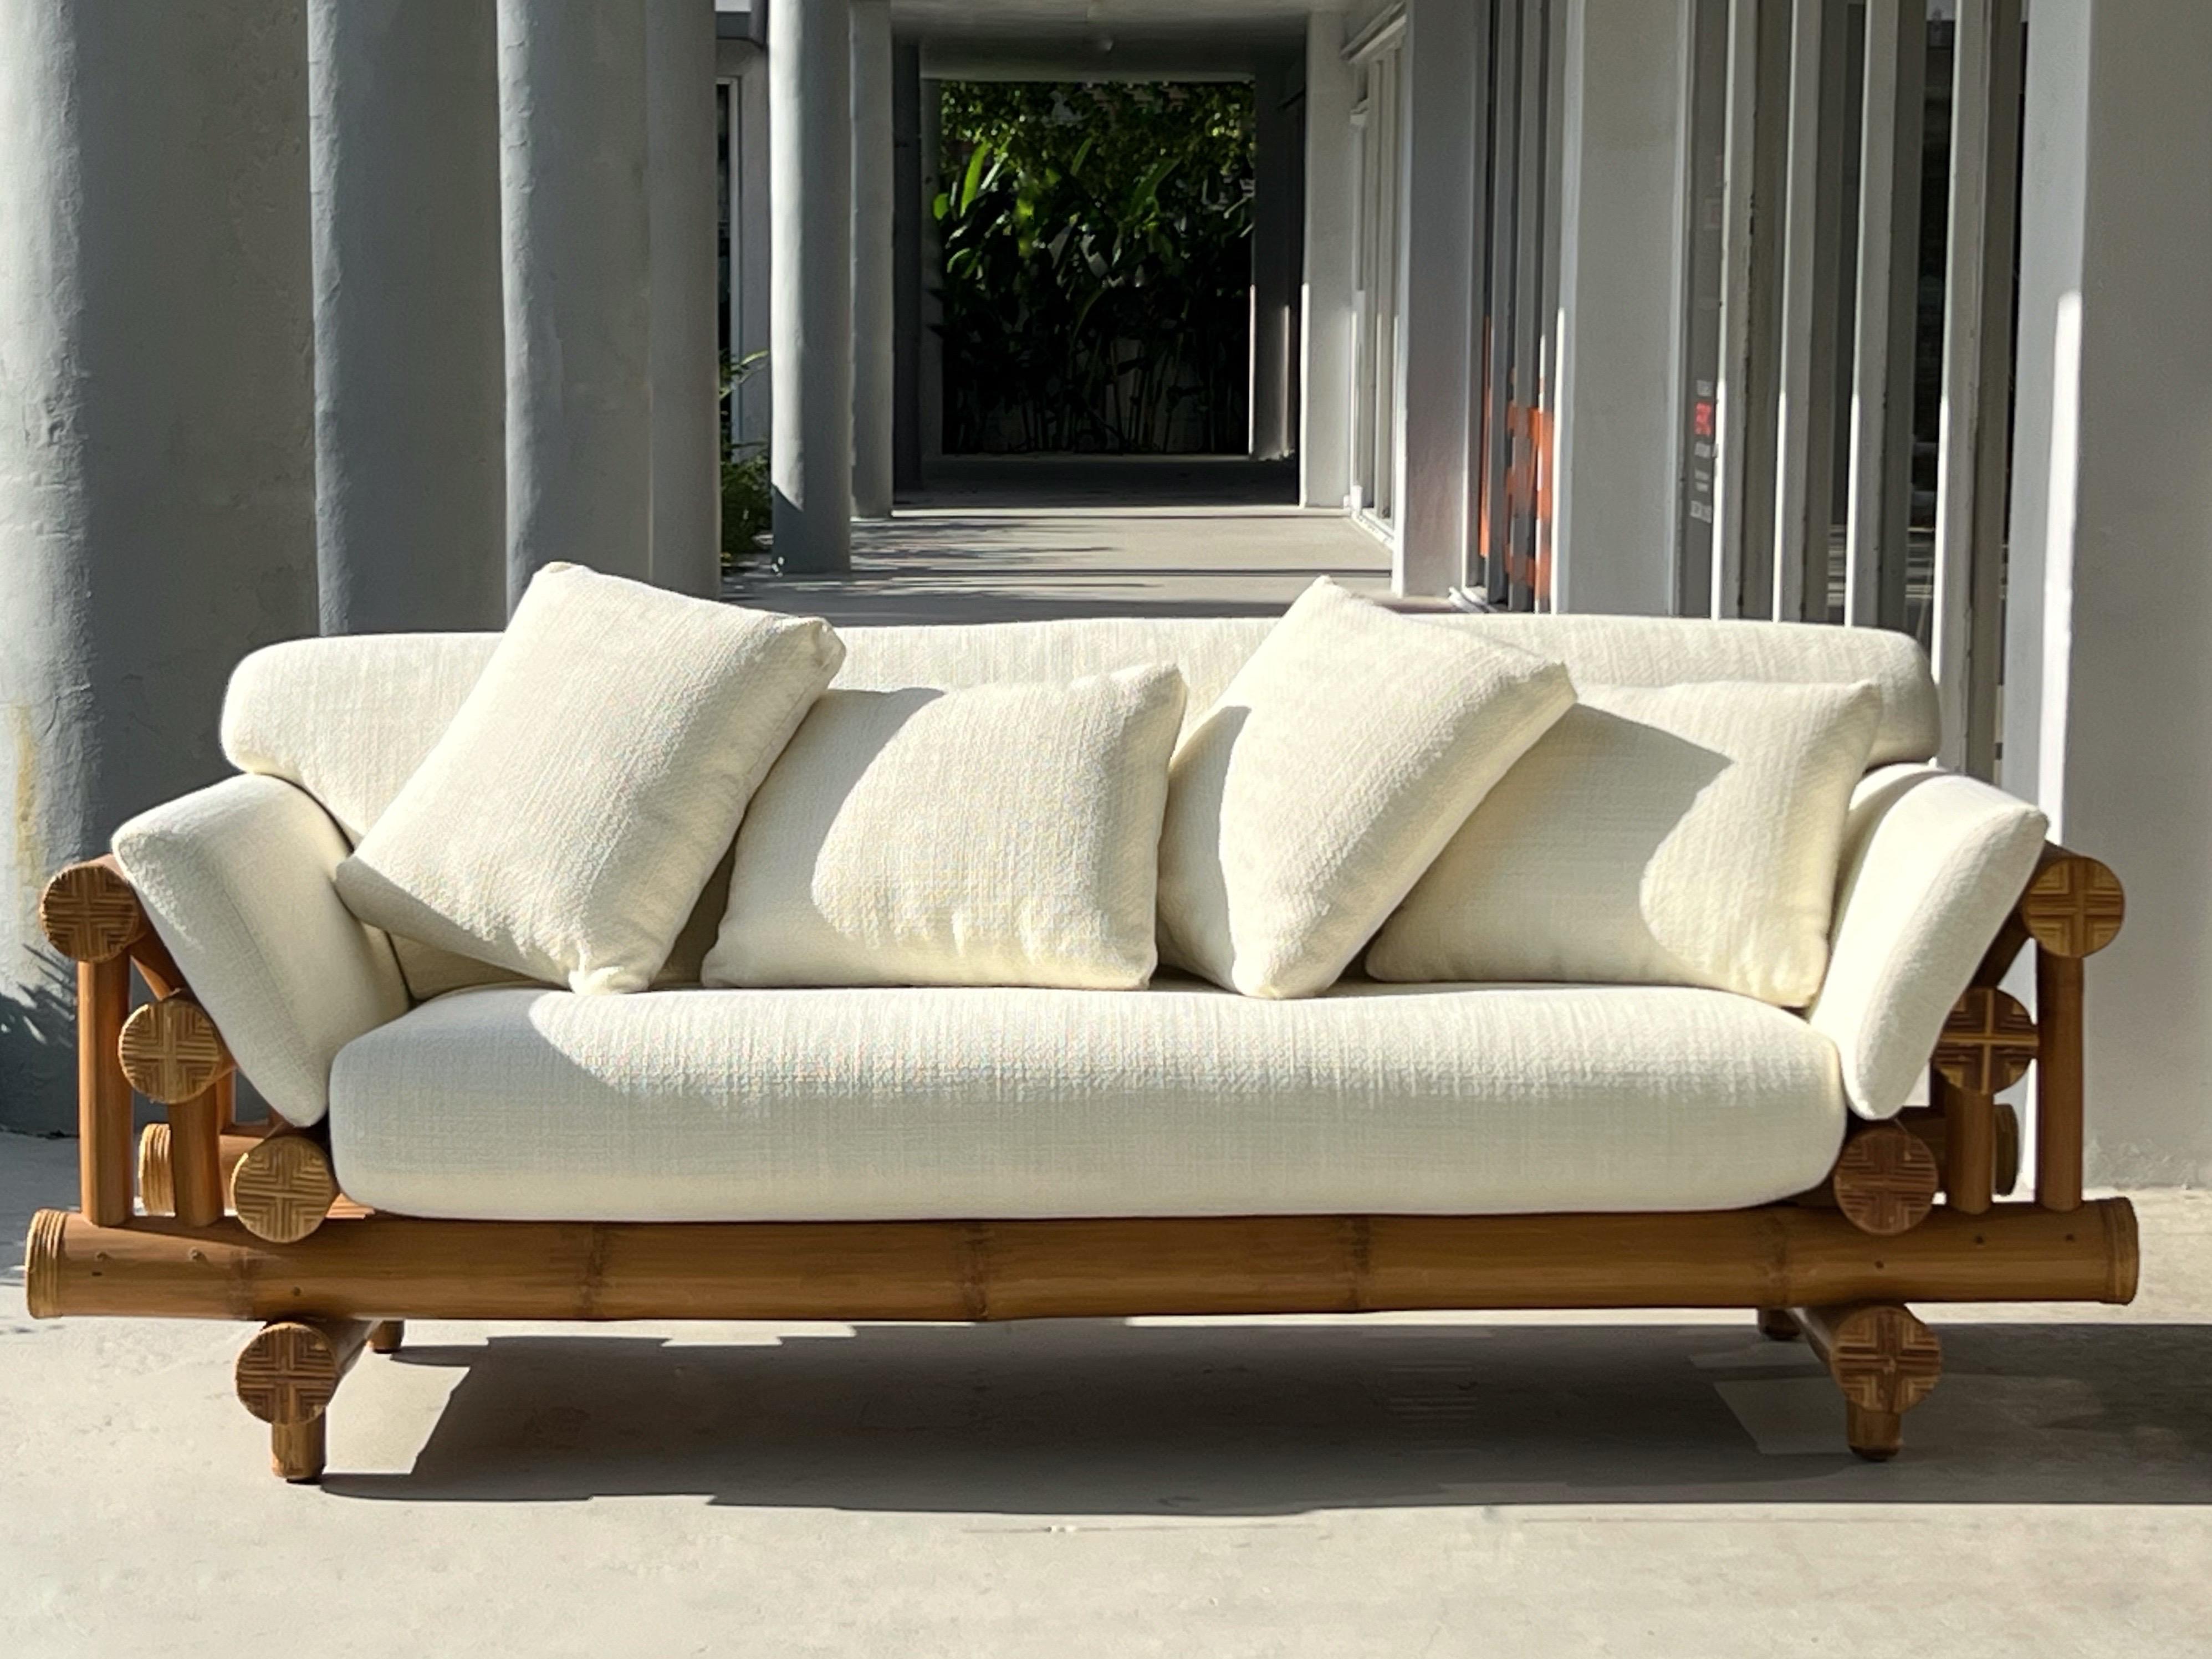 Skulpturales Bambus-Rattan-Sofa, 1970er Jahre (Ende des 20. Jahrhunderts) im Angebot